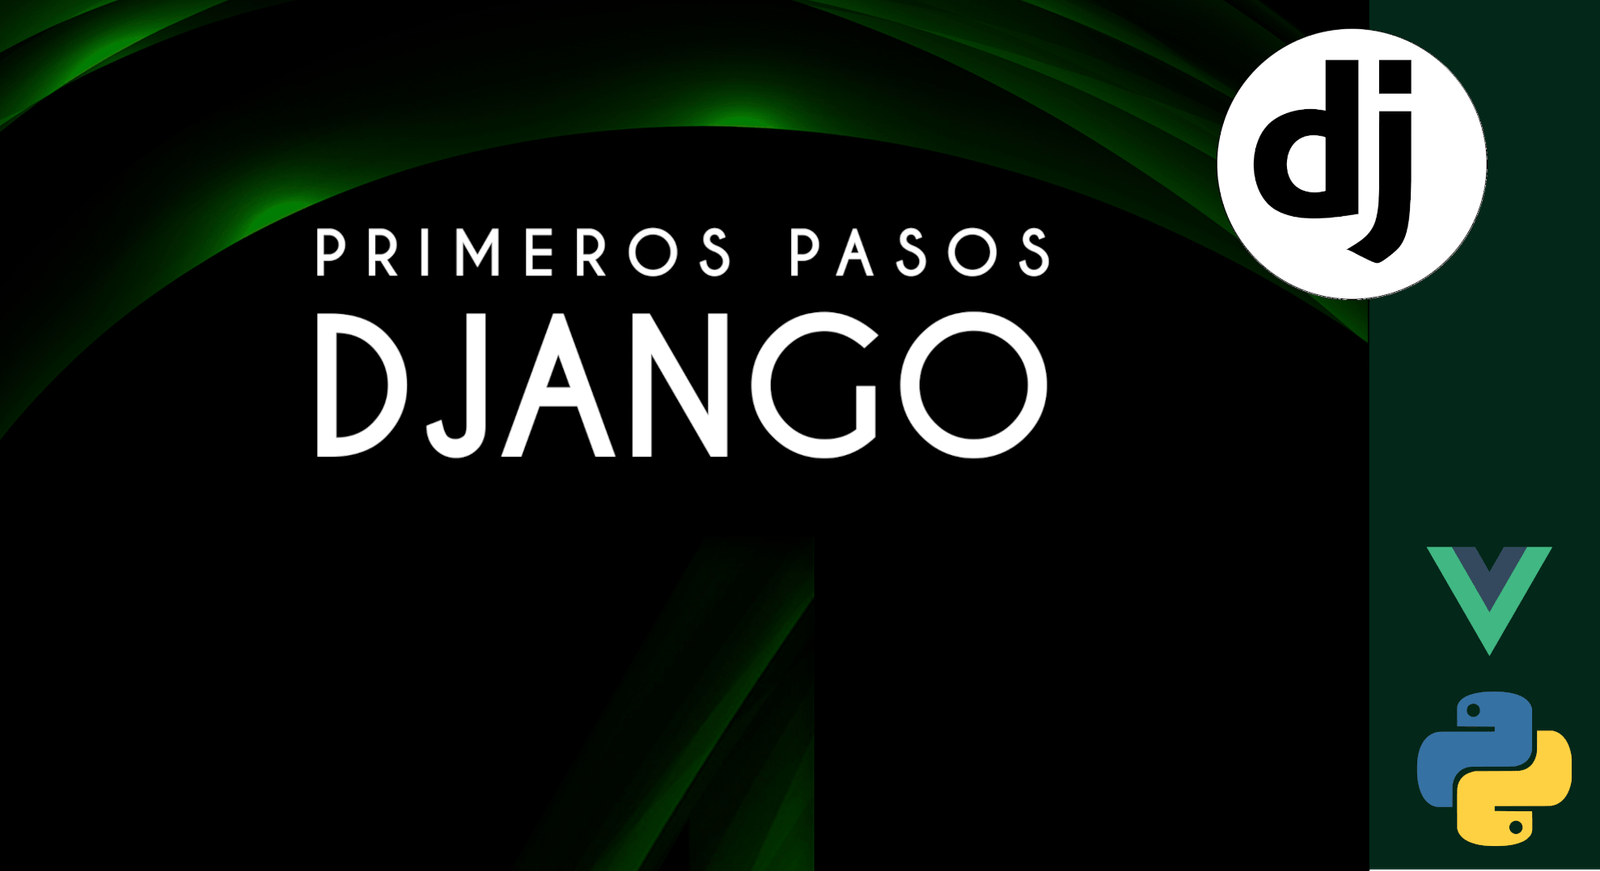 Get started with Django 5, master the most popular Python web framework